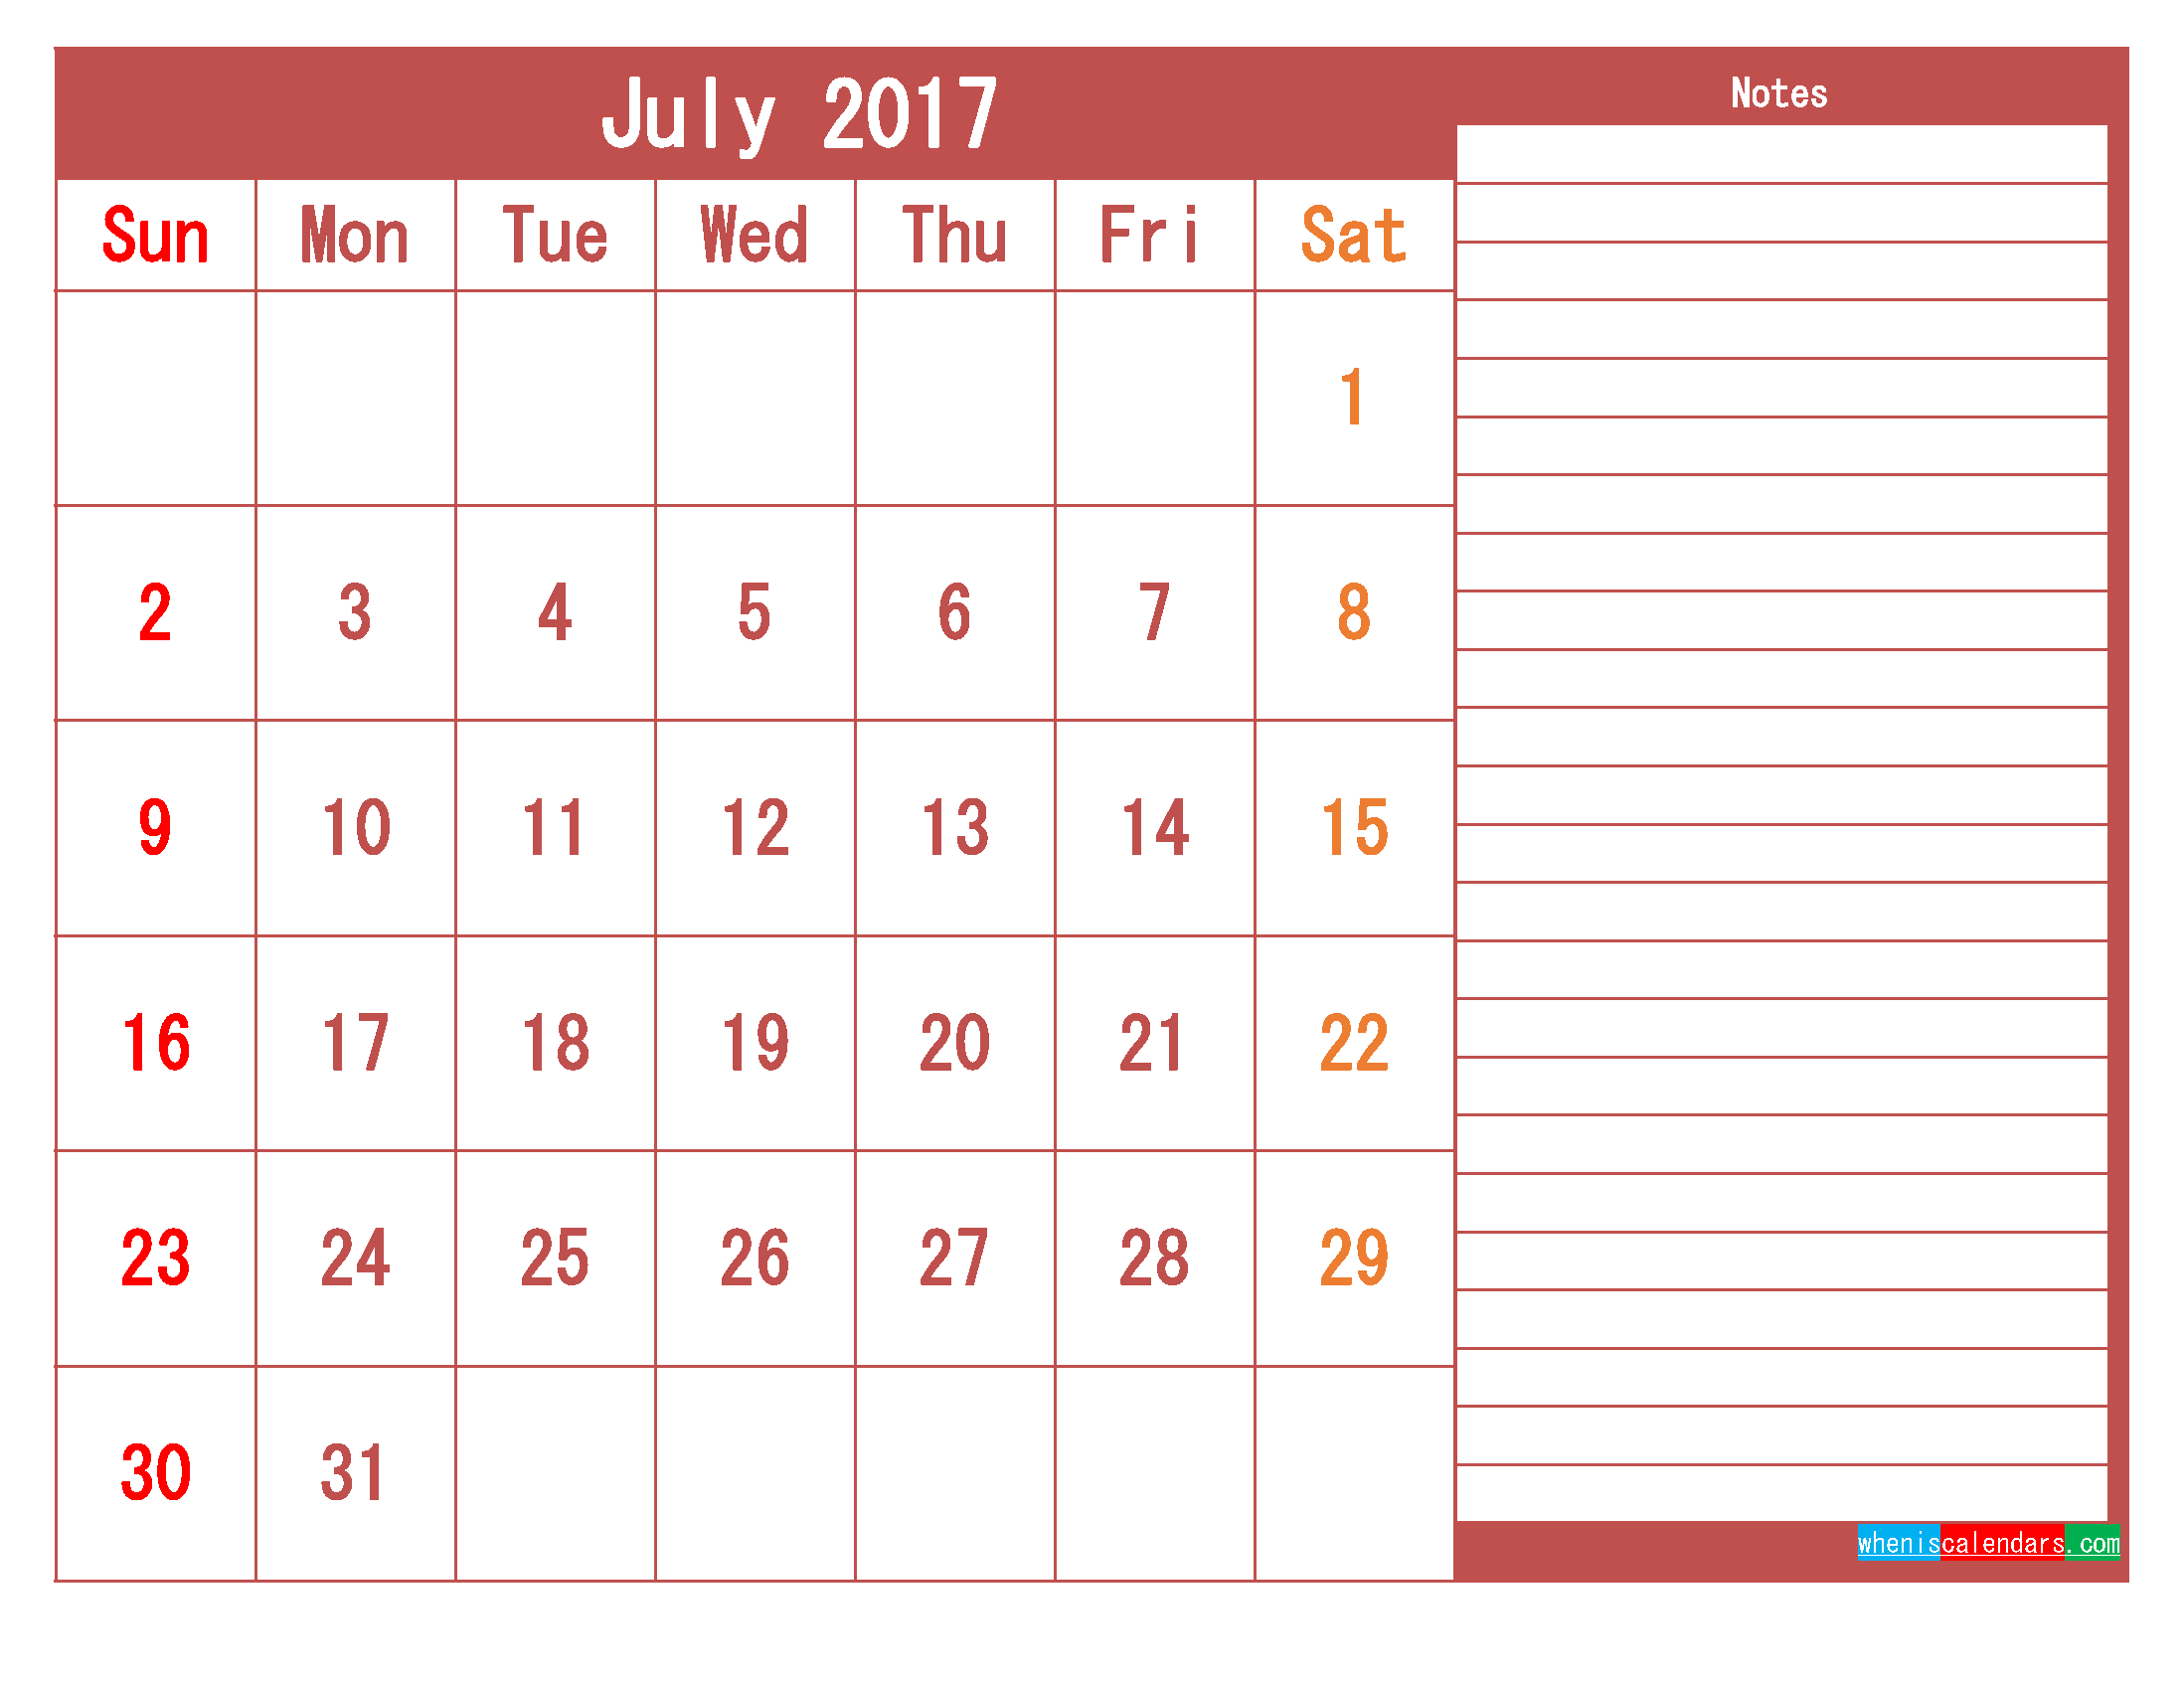 July 2017 Printable Calendar Template As PDF